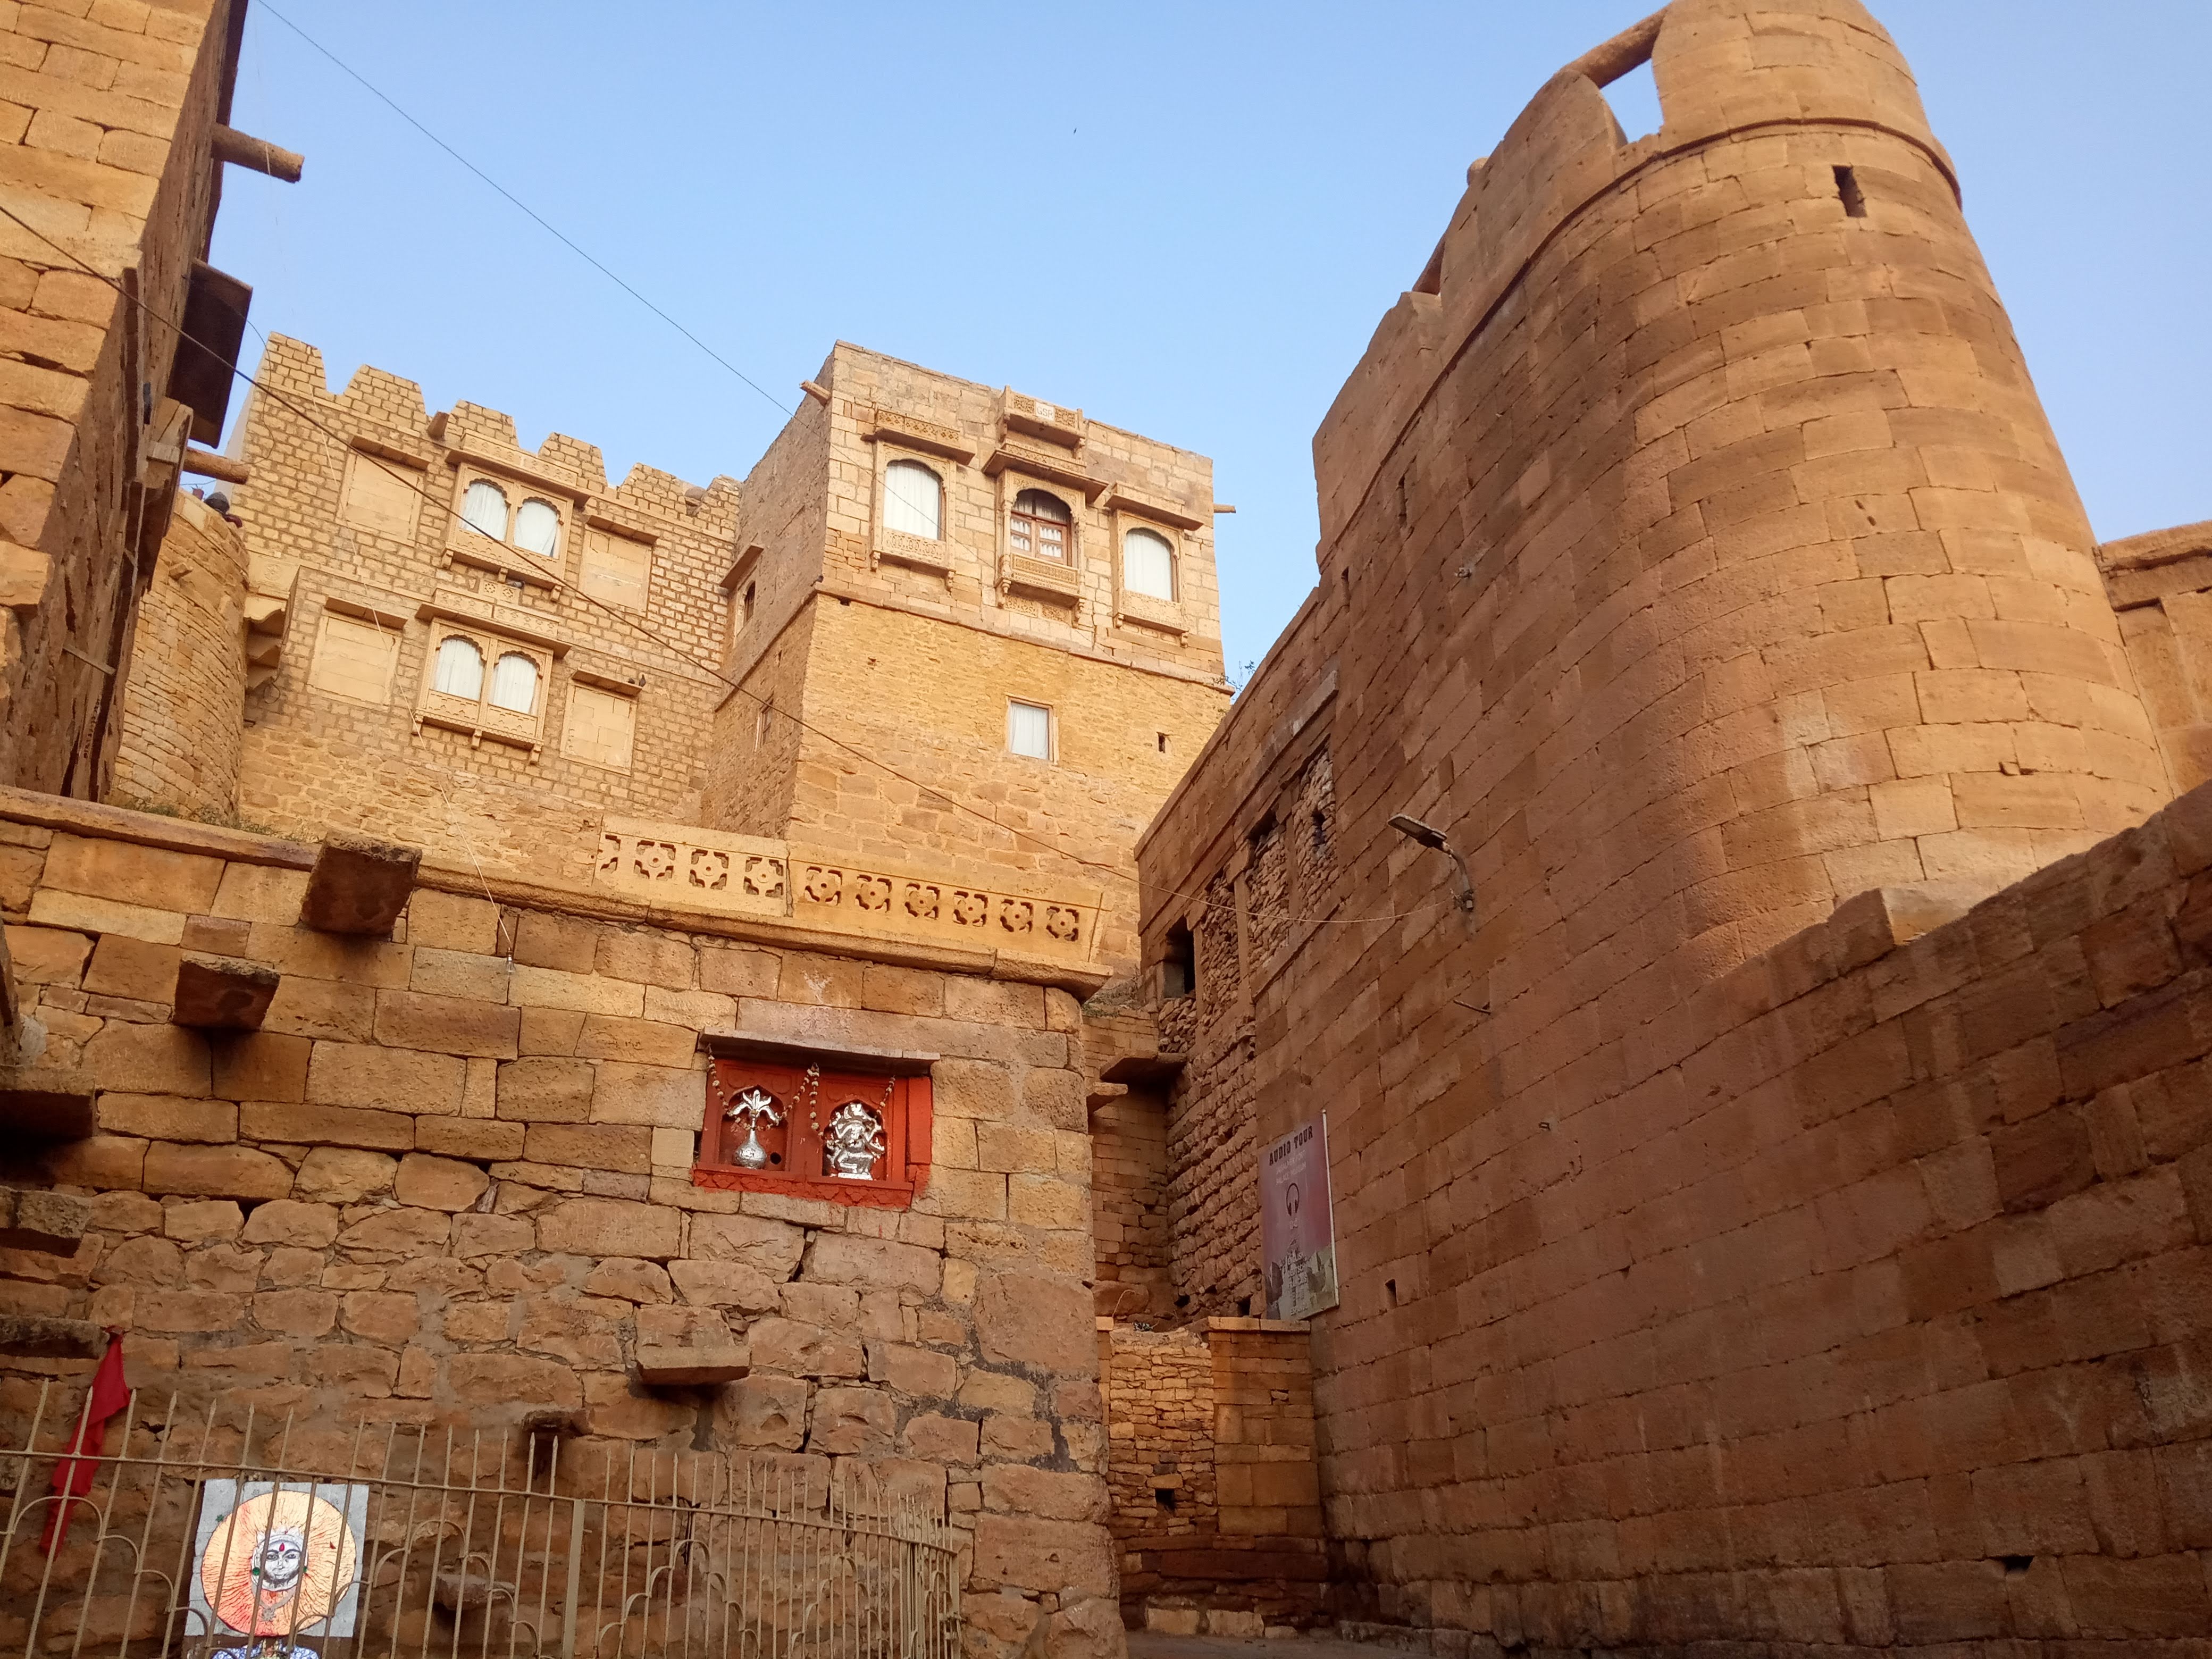 Jaisalmer Fort in Jaisalmer